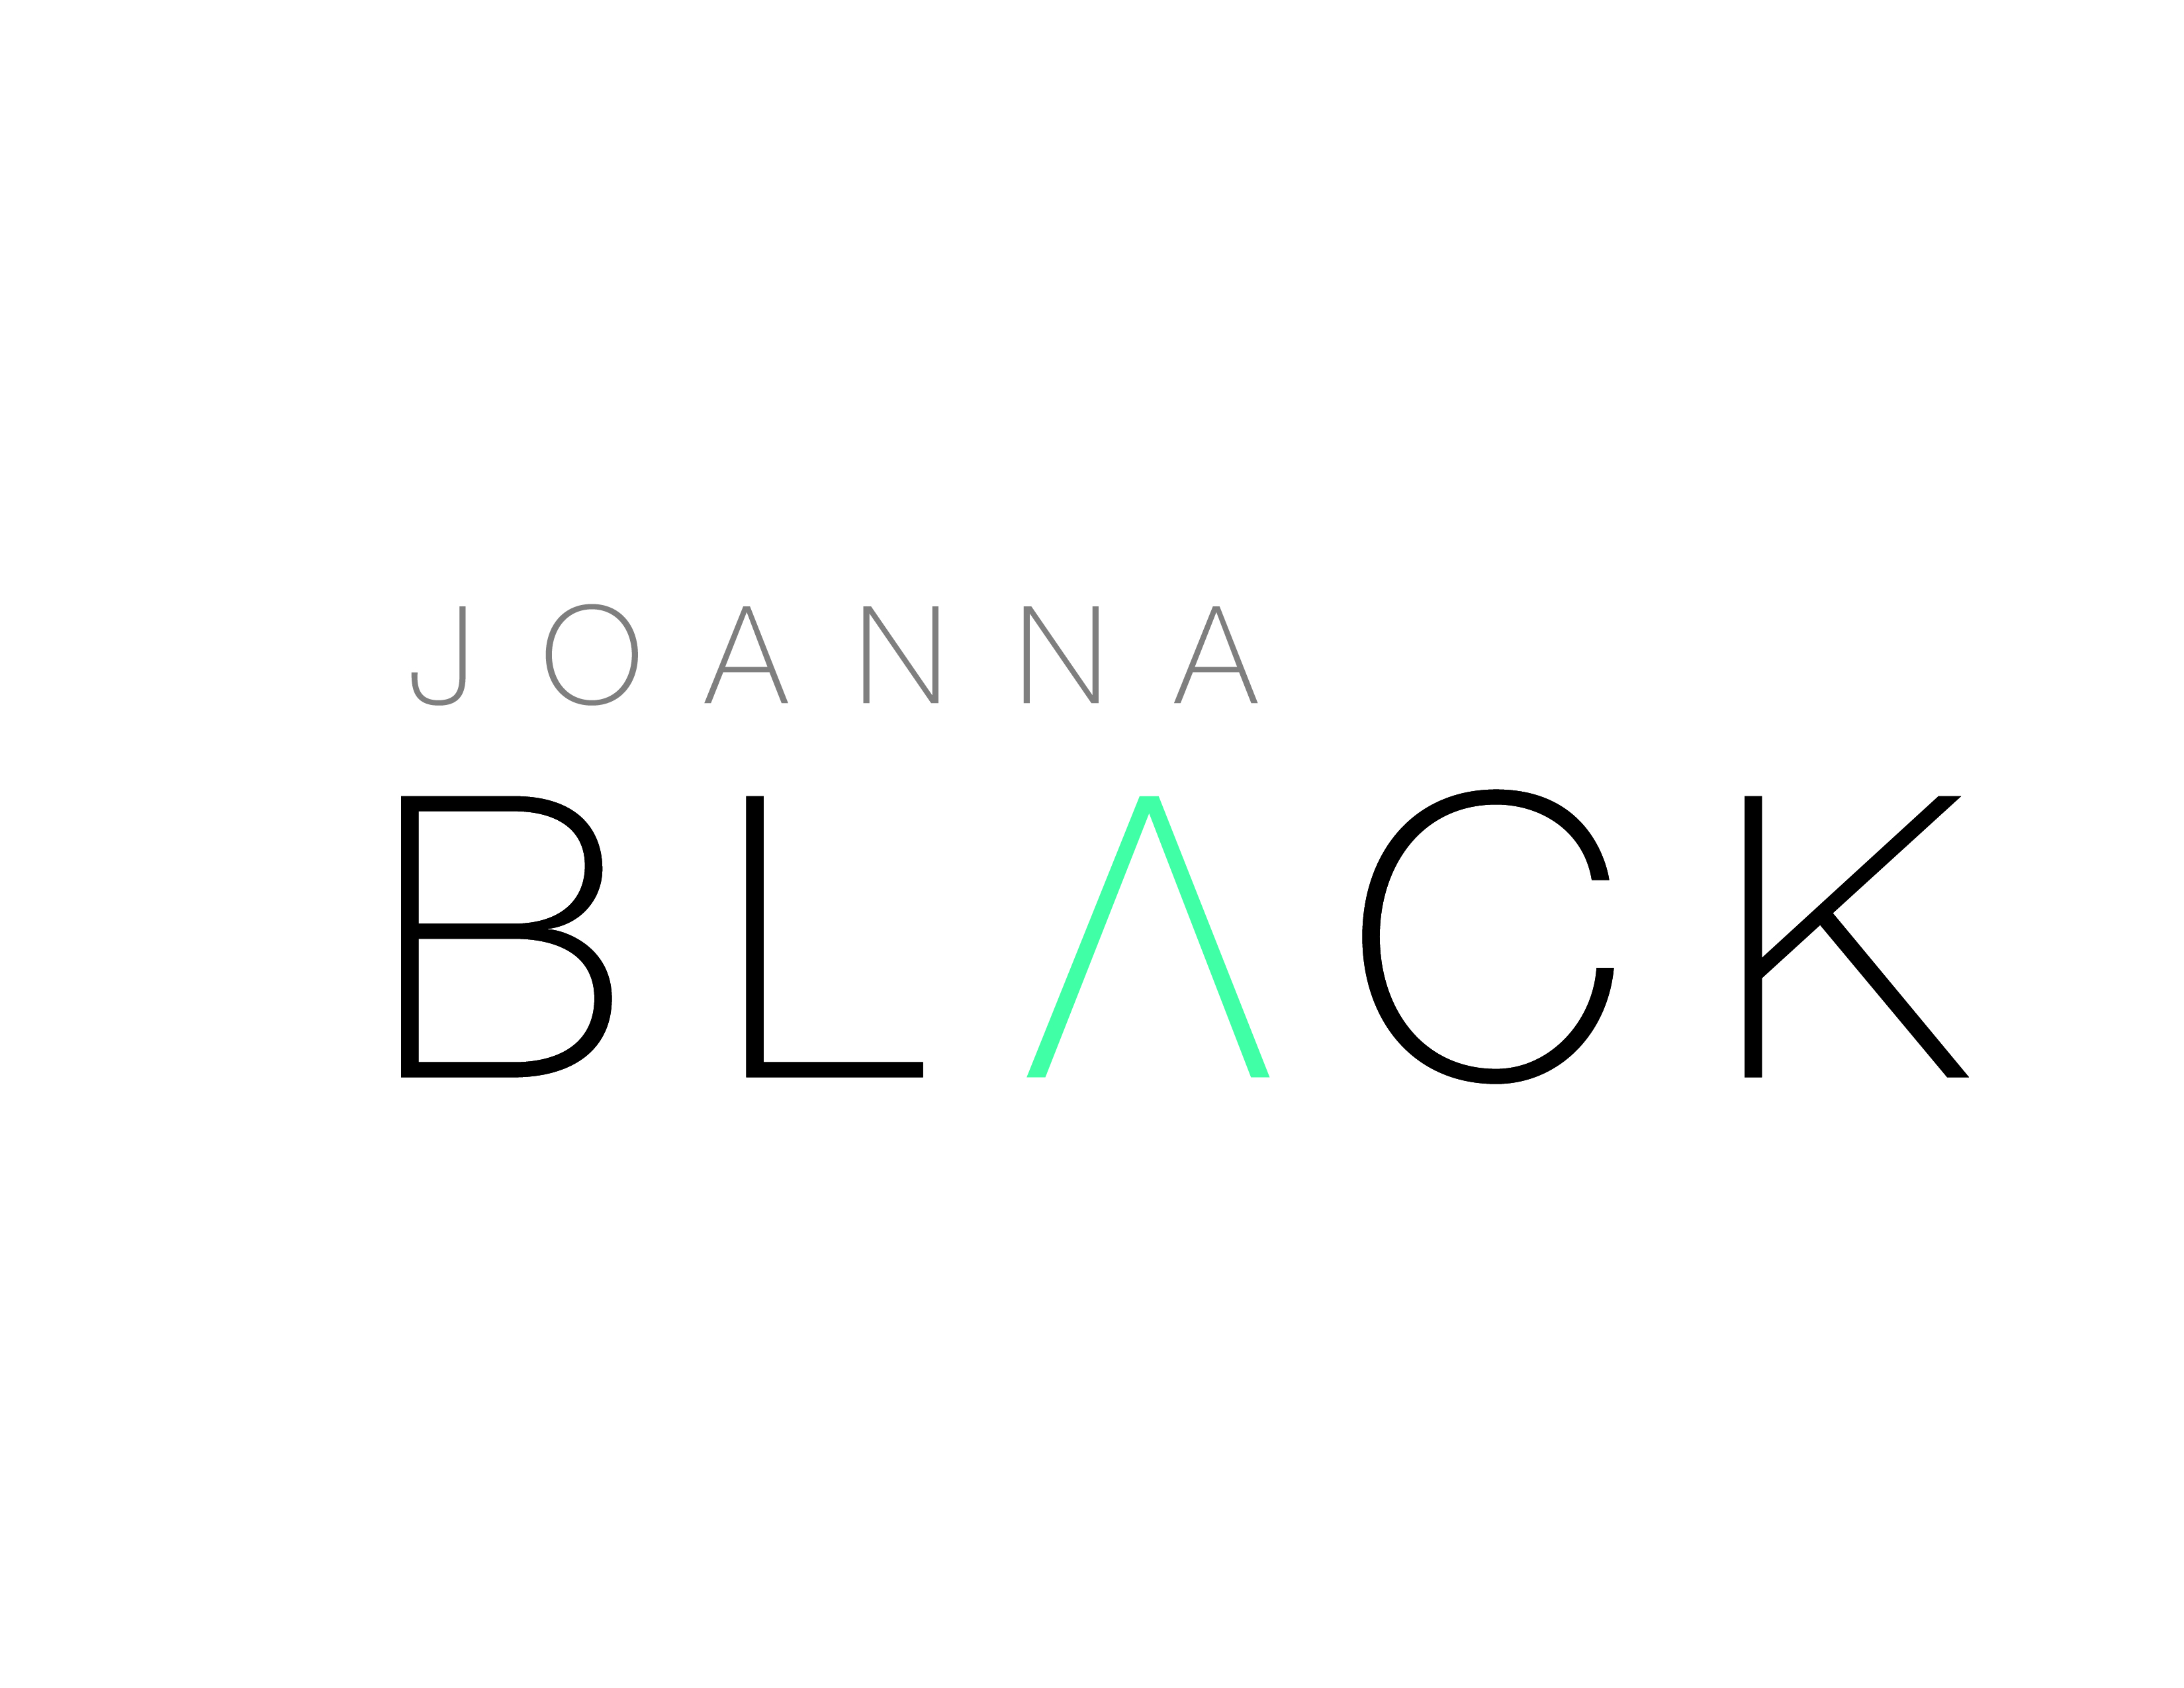 Joanna Black